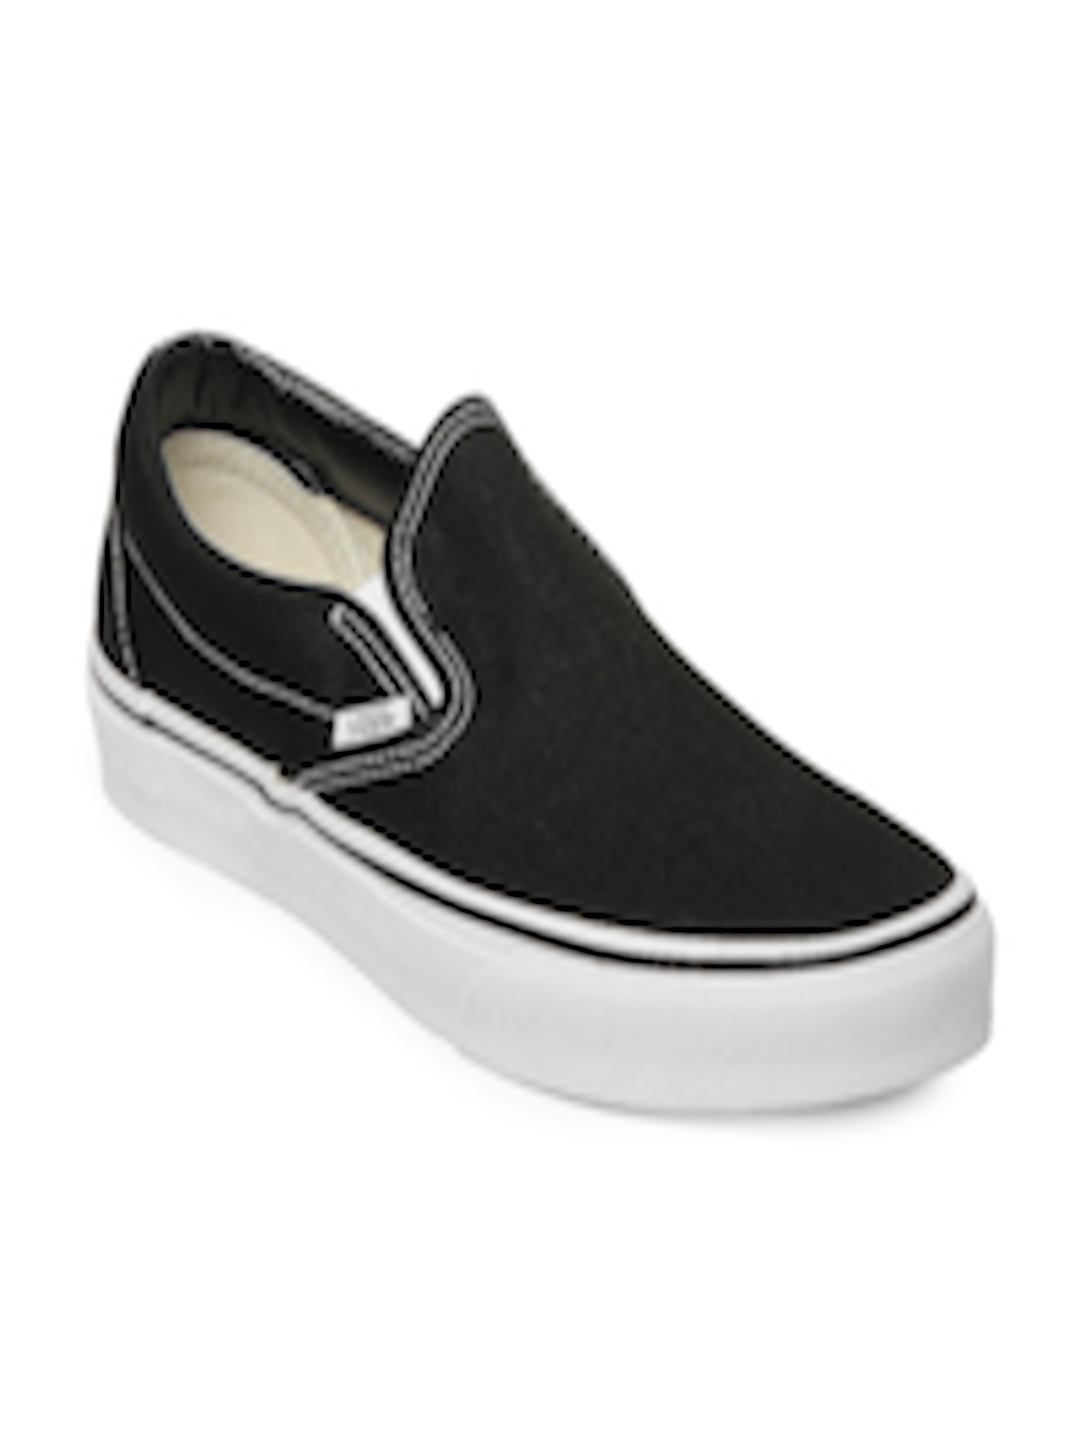 Buy Vans Men Black Classic Slip On Casual Shoes - Casual Shoes for Men ...